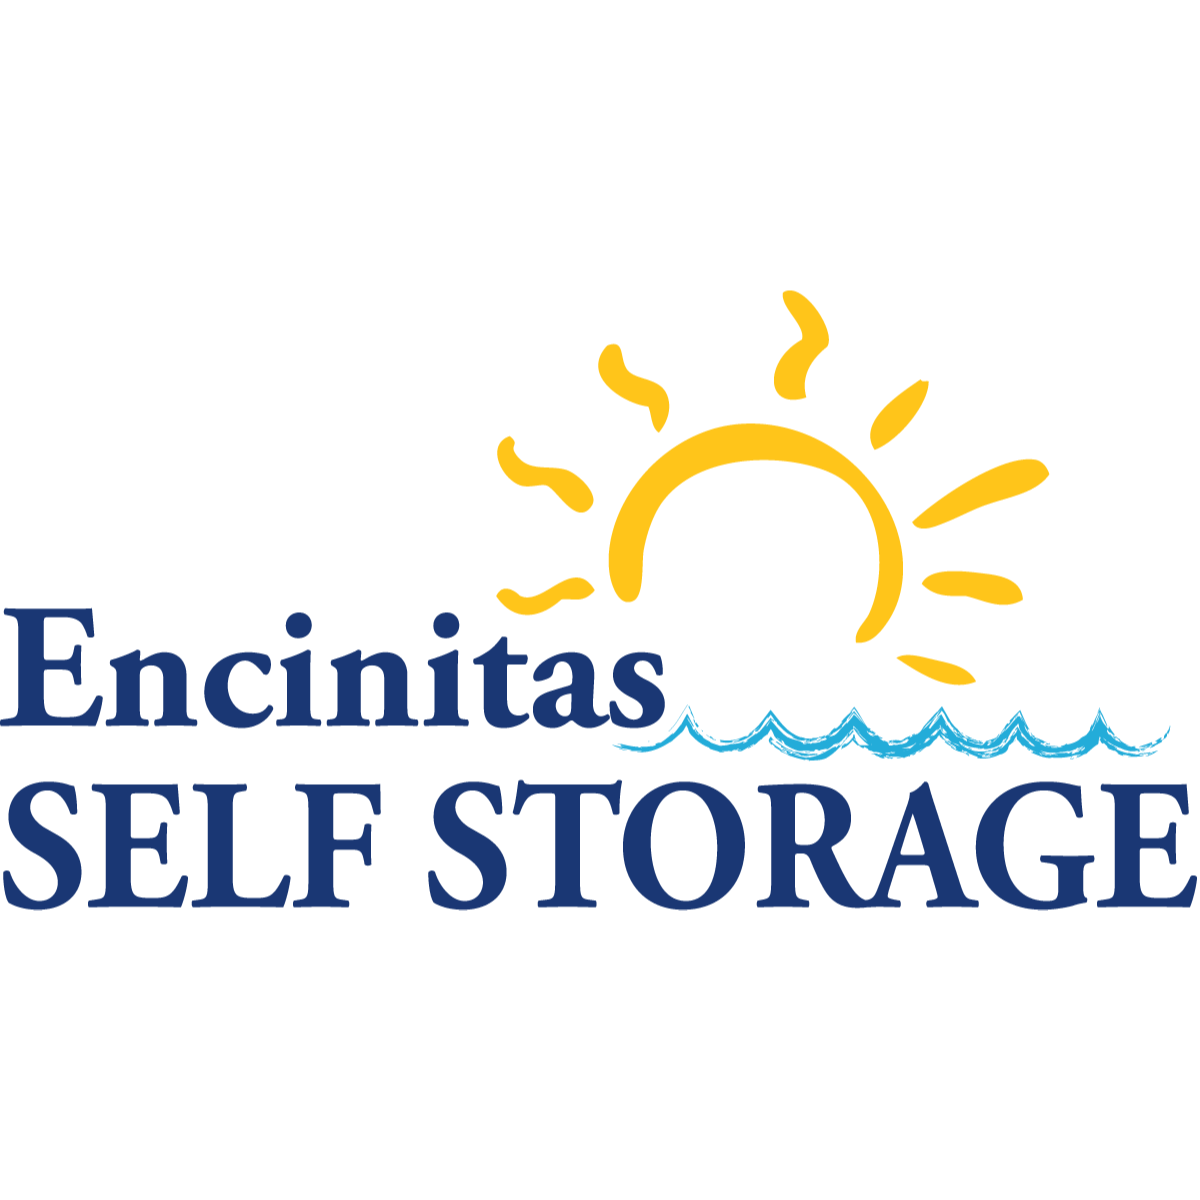 Encinitas Self Storage - Encinitas, CA 92024 - (760)652-3969 | ShowMeLocal.com